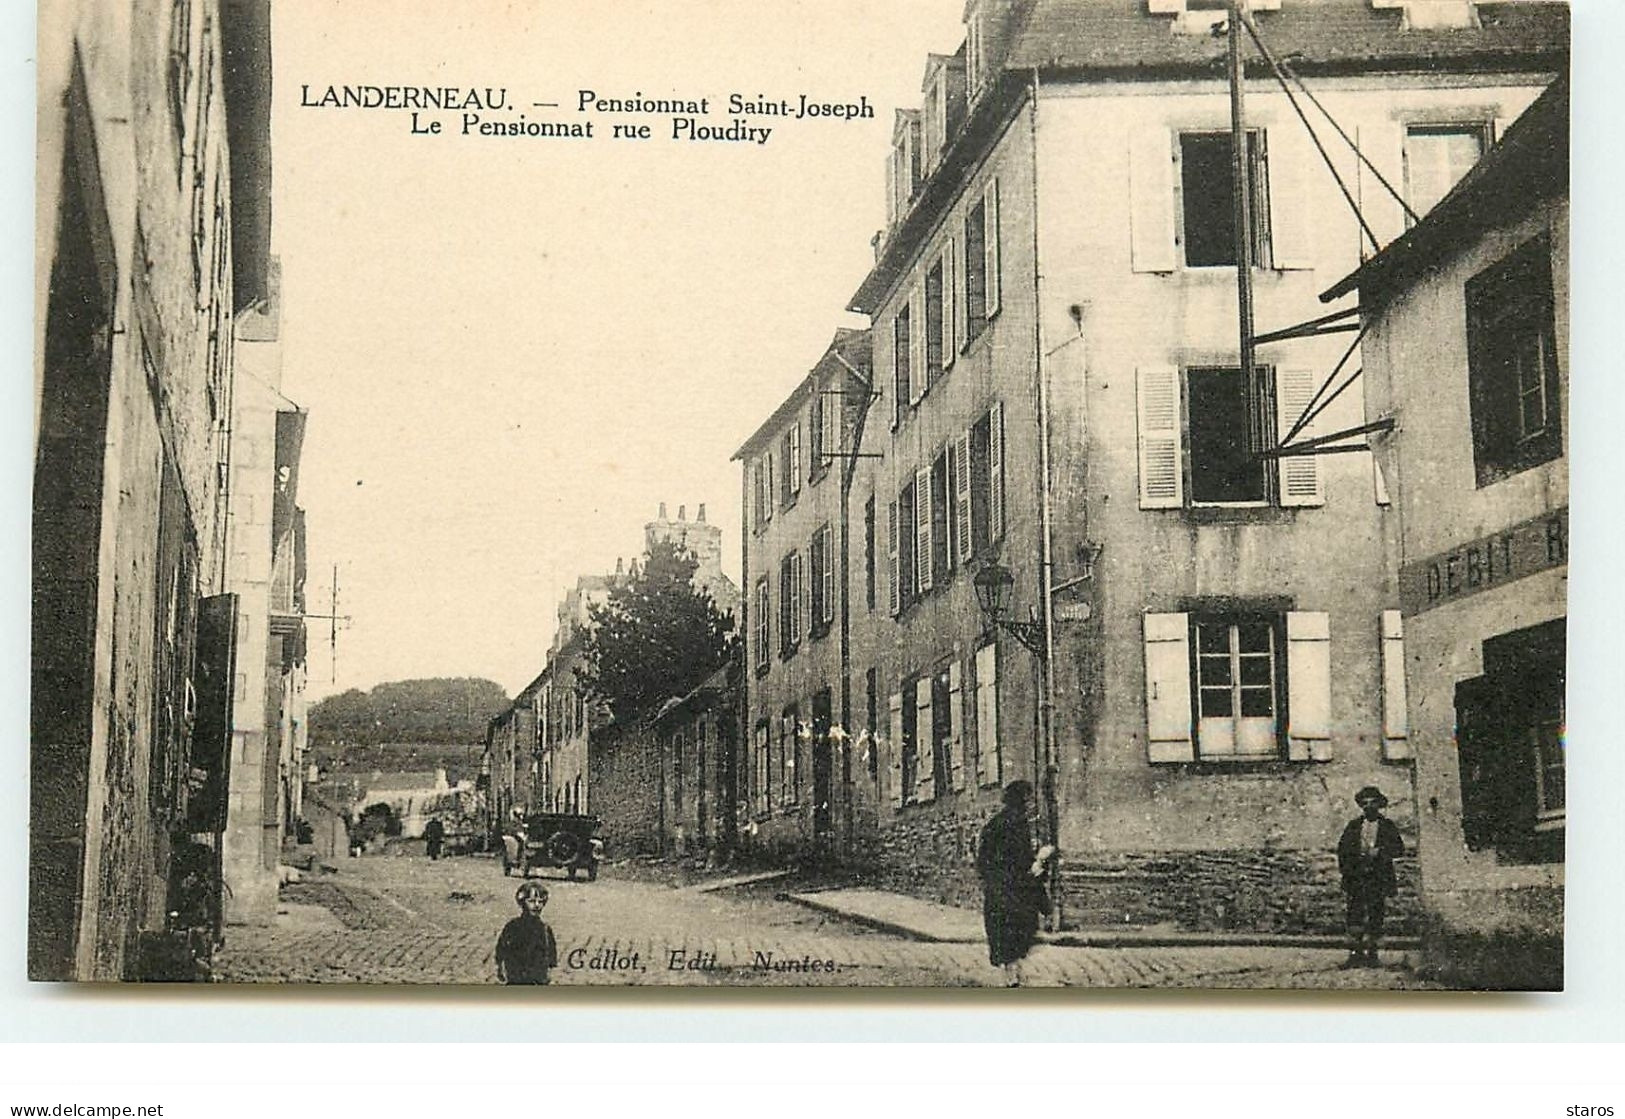 LANDERNEAU - Pensionnat Saint-Joseph - Le Pensionnat Rue Ploudiry - Landerneau